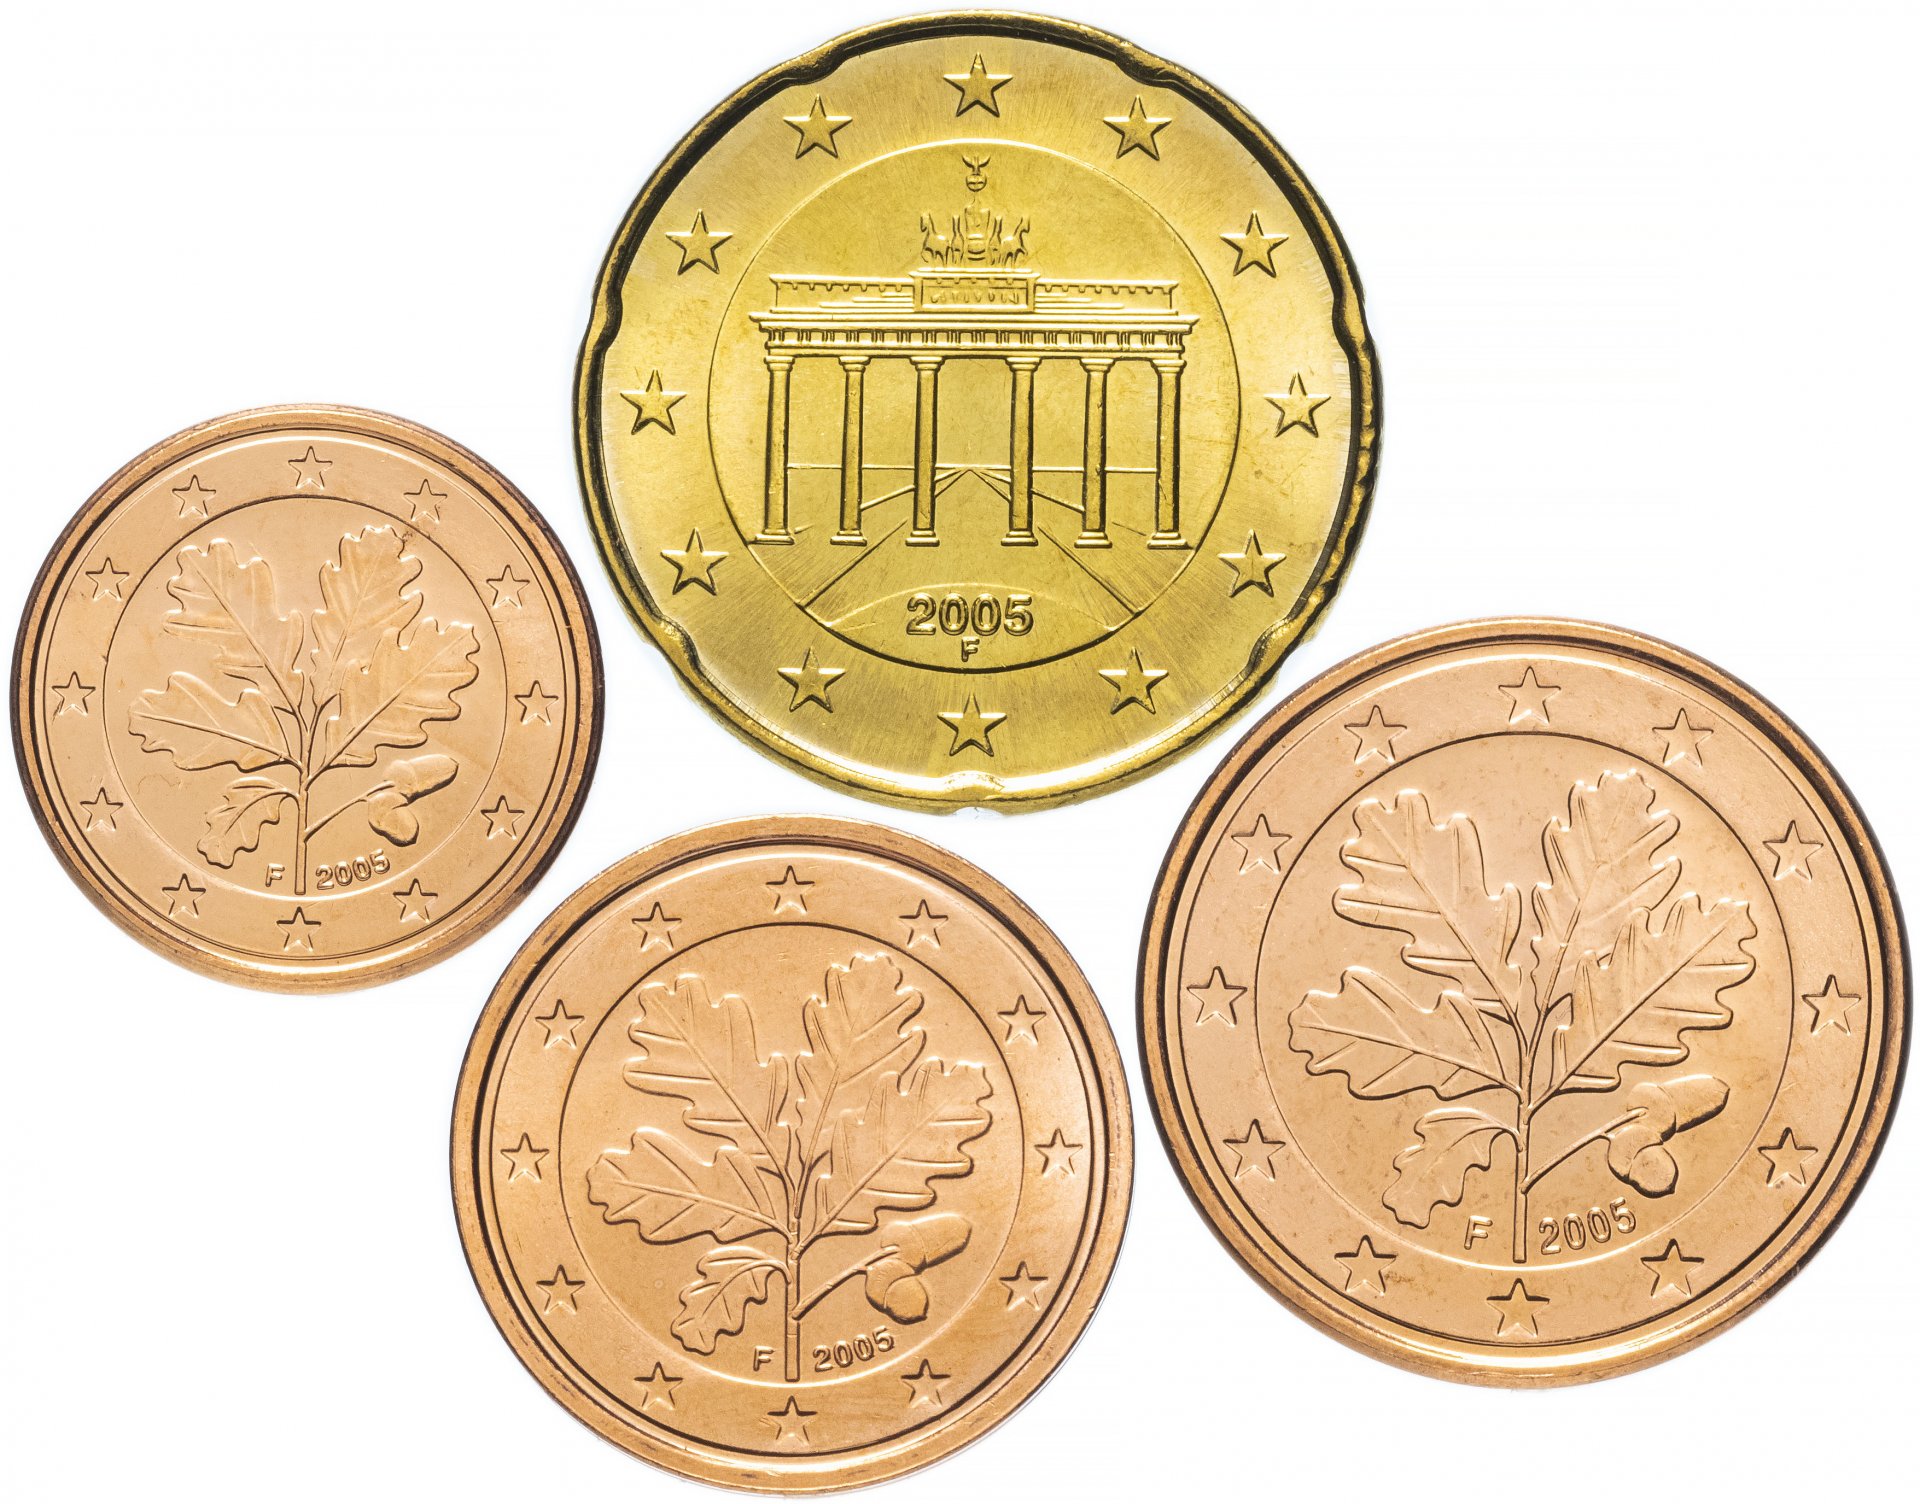 Мелкая монета 4. 20 Eurocent 2005 монеты. Монеты магазин монетник. Нумизматический набор монет. Германские монеты.